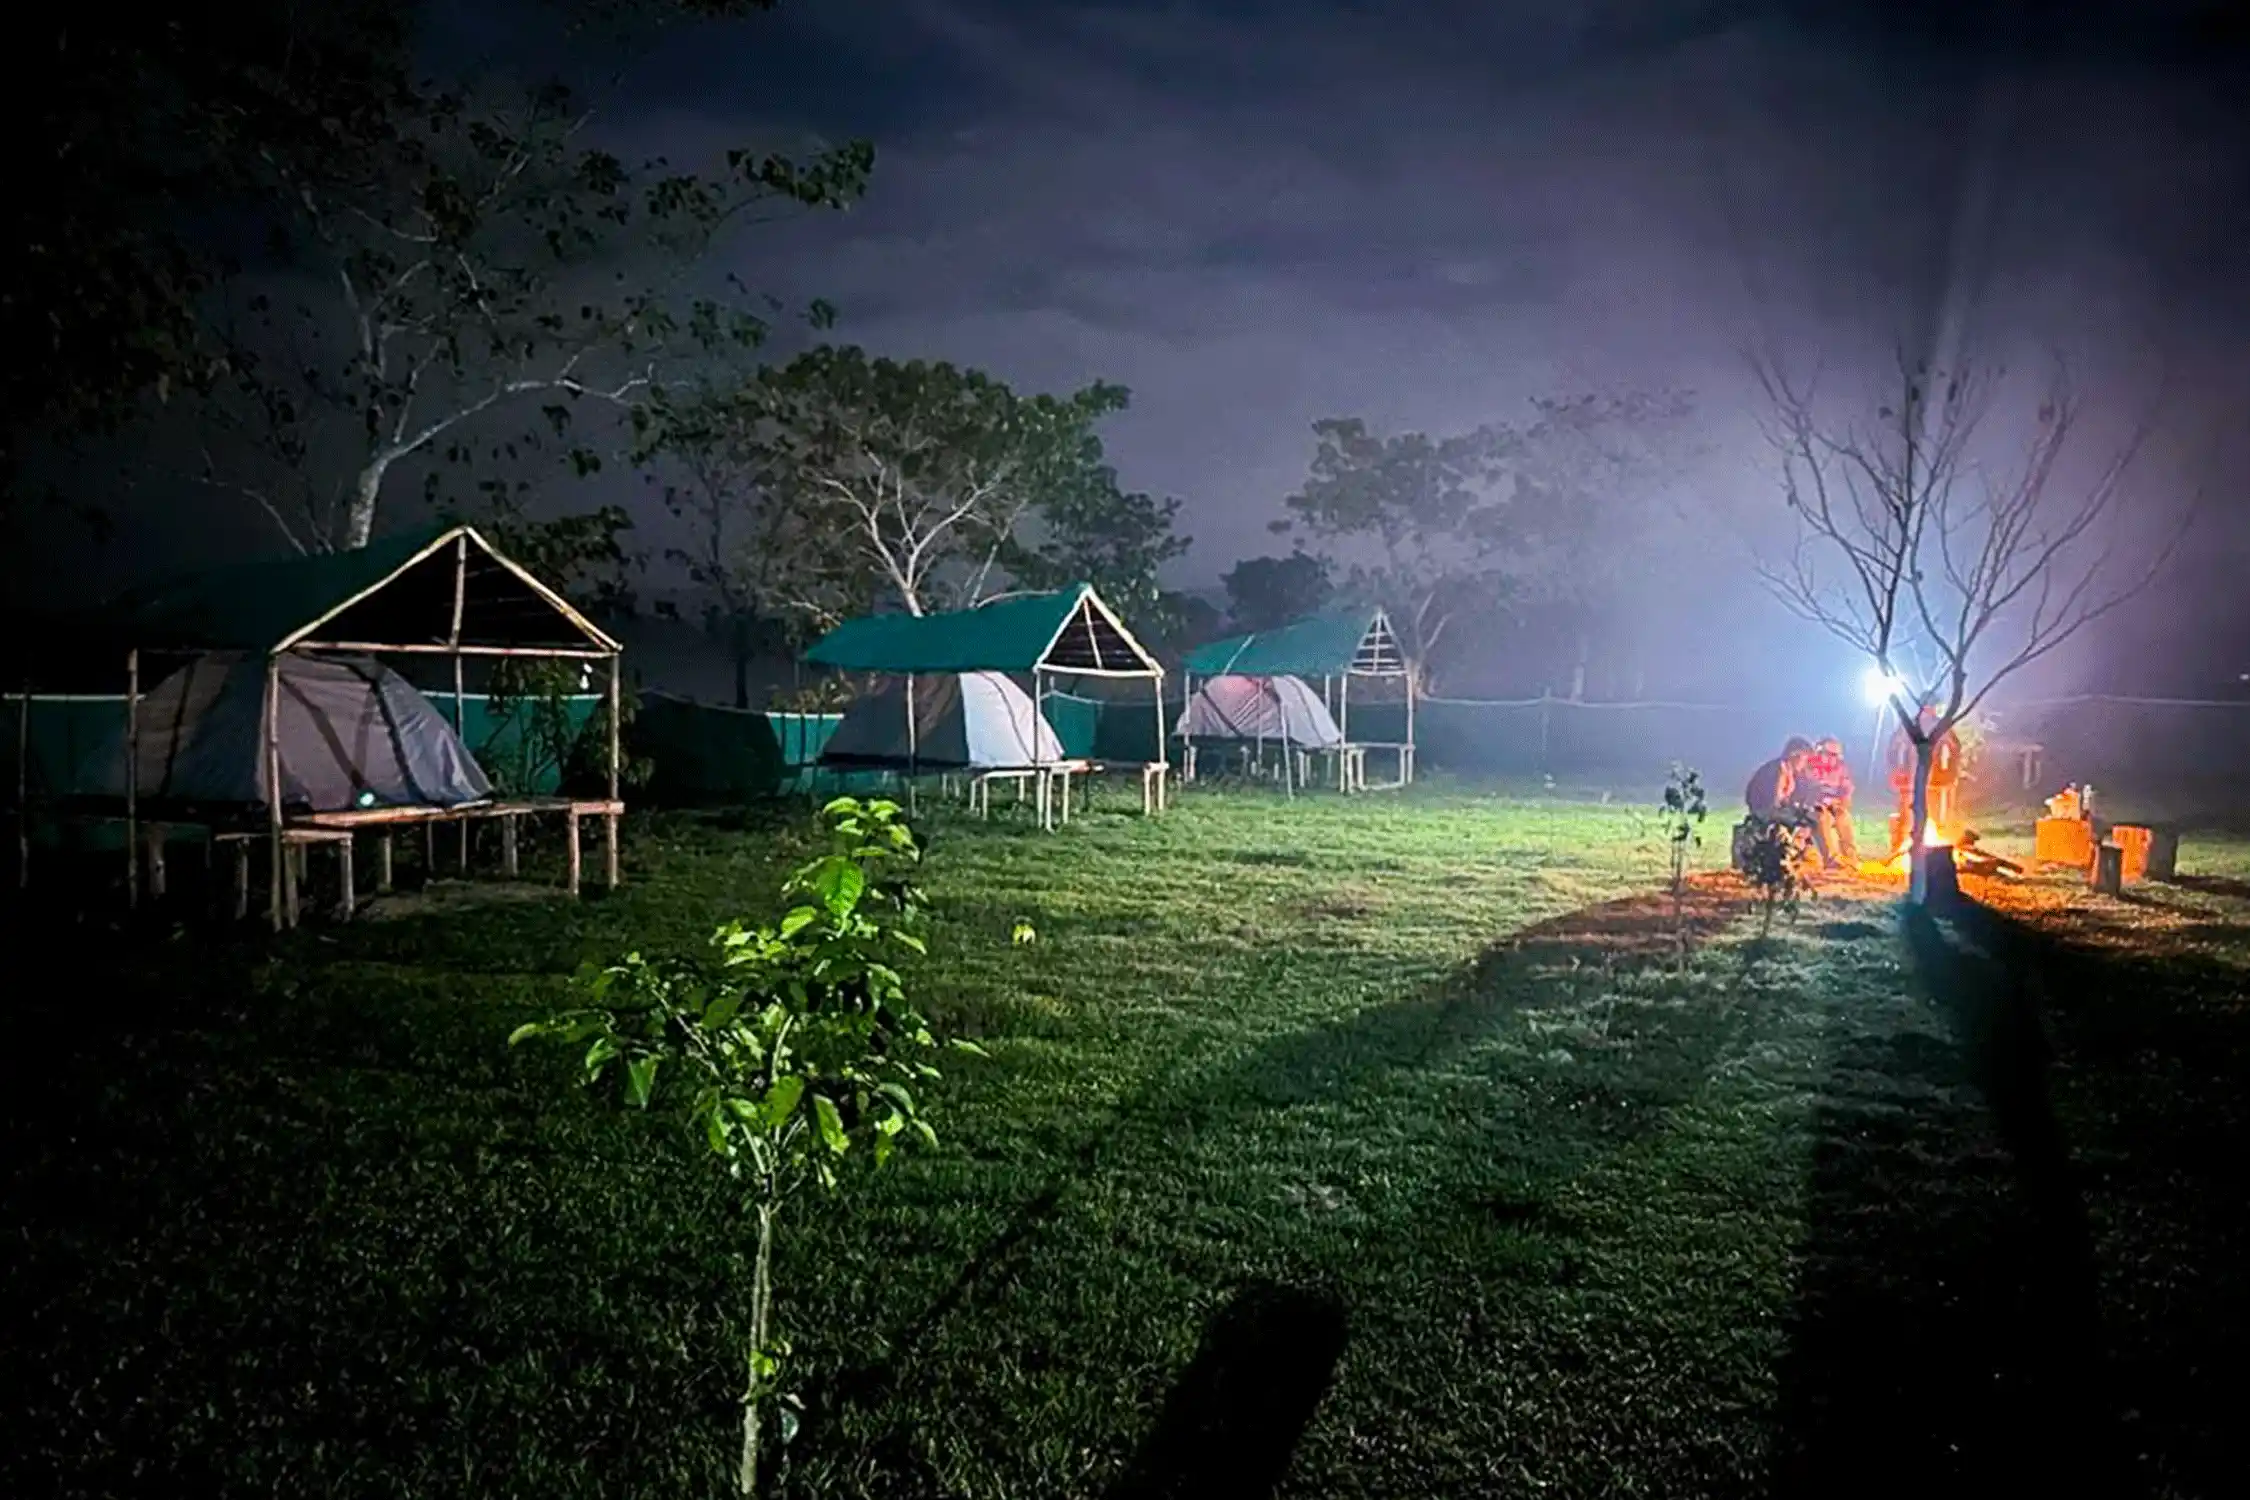 Fesengbor Kaziranga Eco Camp